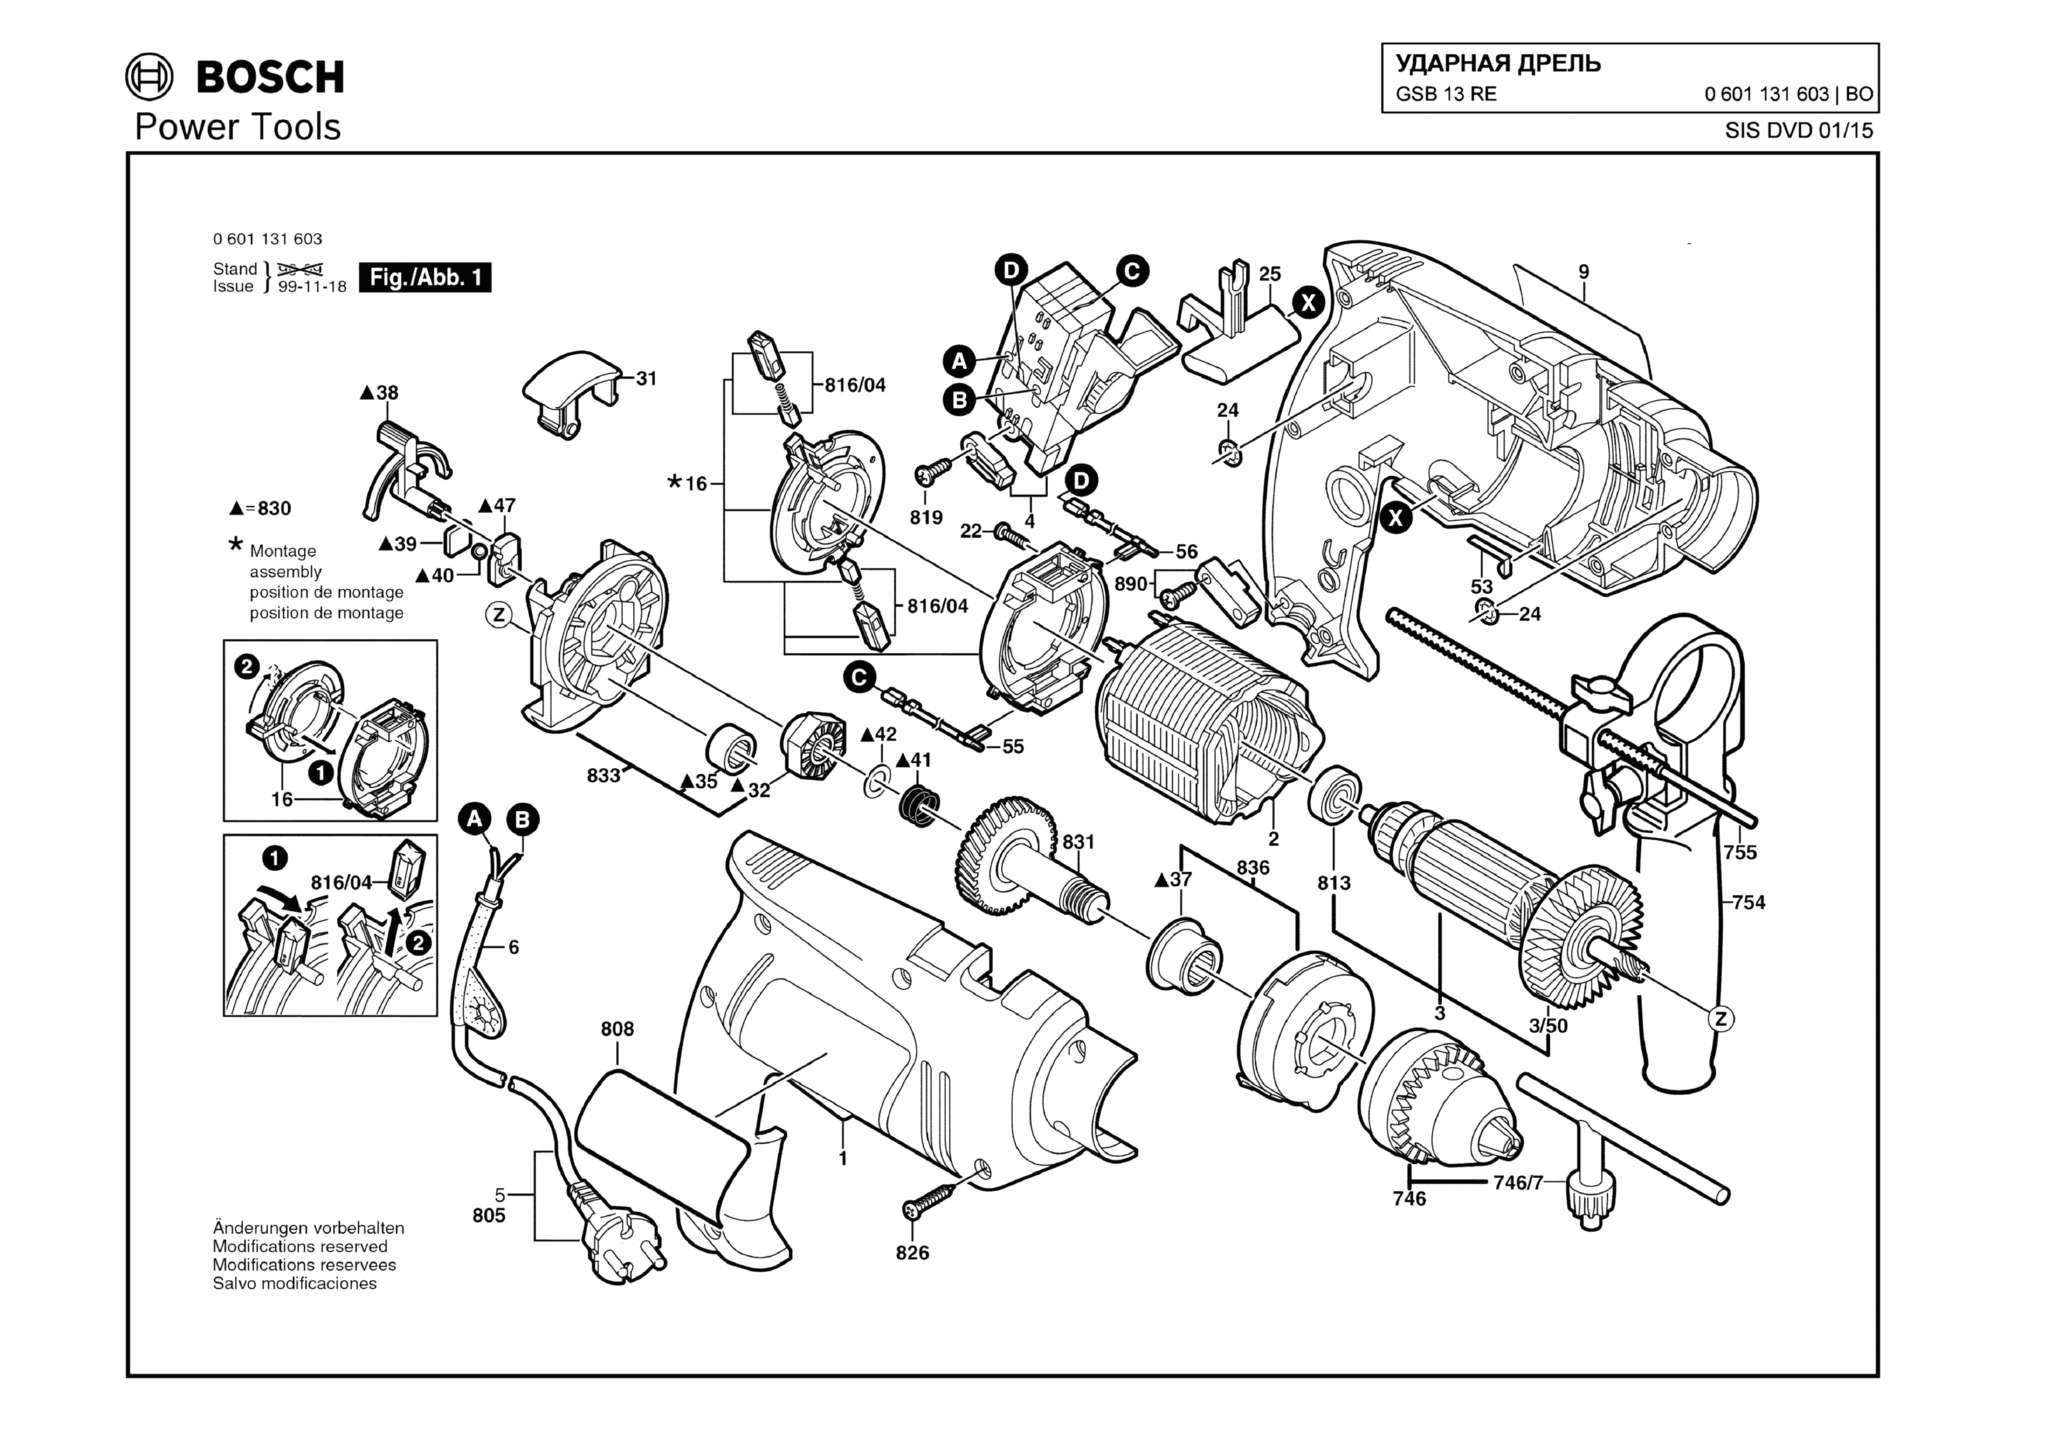 Запчасти, схема и деталировка Bosch GSB 13 RE (ТИП 0601131603)